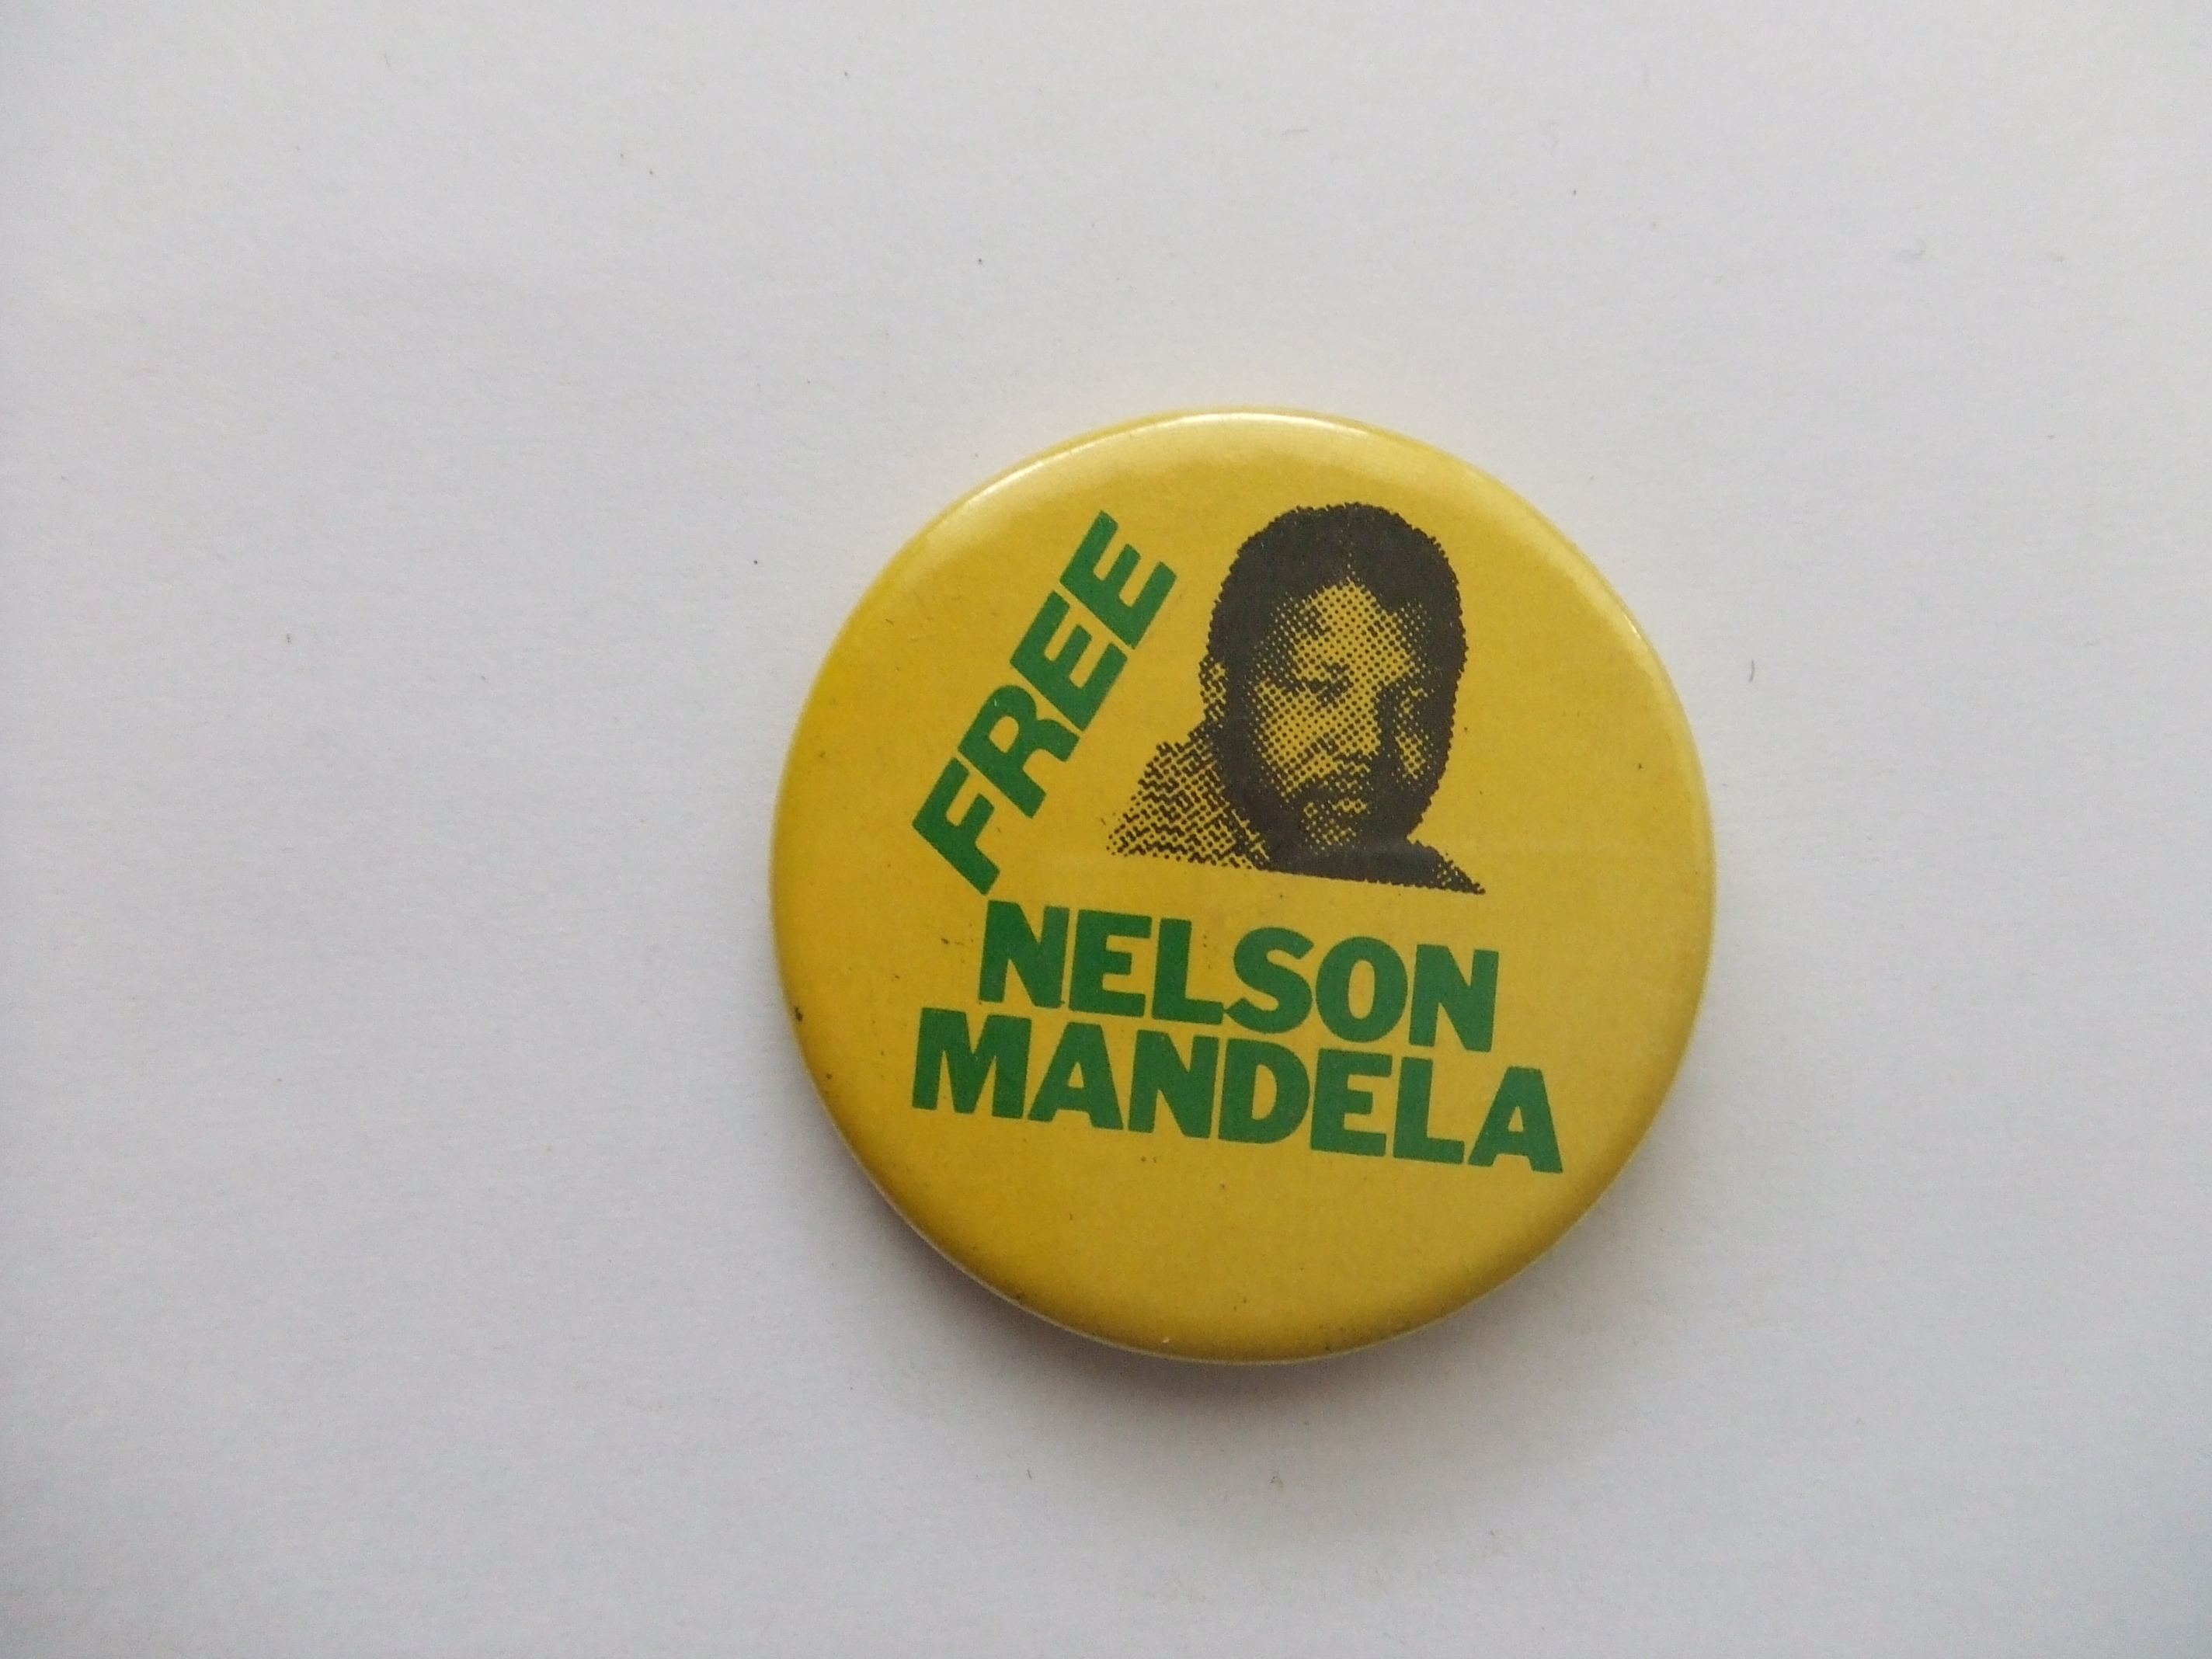 Nelson Mandela Oud-president Zuid-Afrika en anti-apartheid